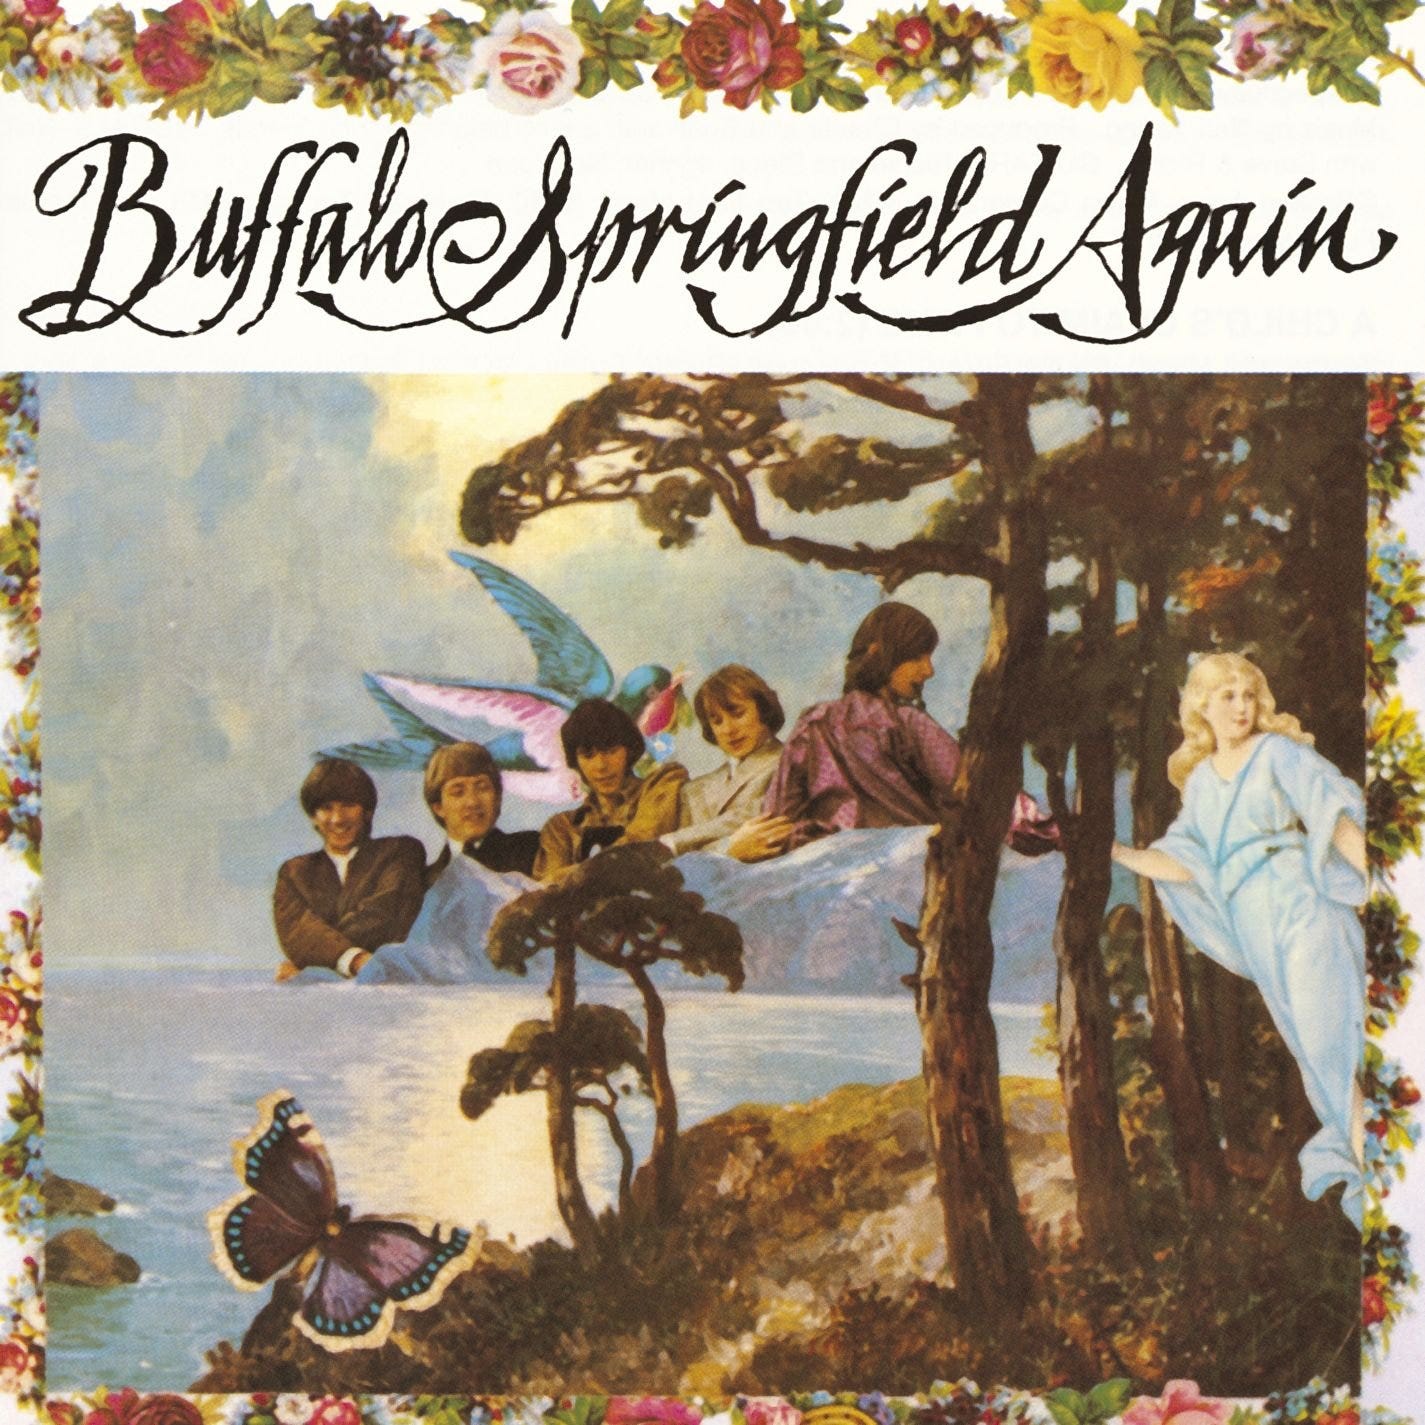 Buffalo Springfield - Buffalo Springfield Again - Amazon.com Music